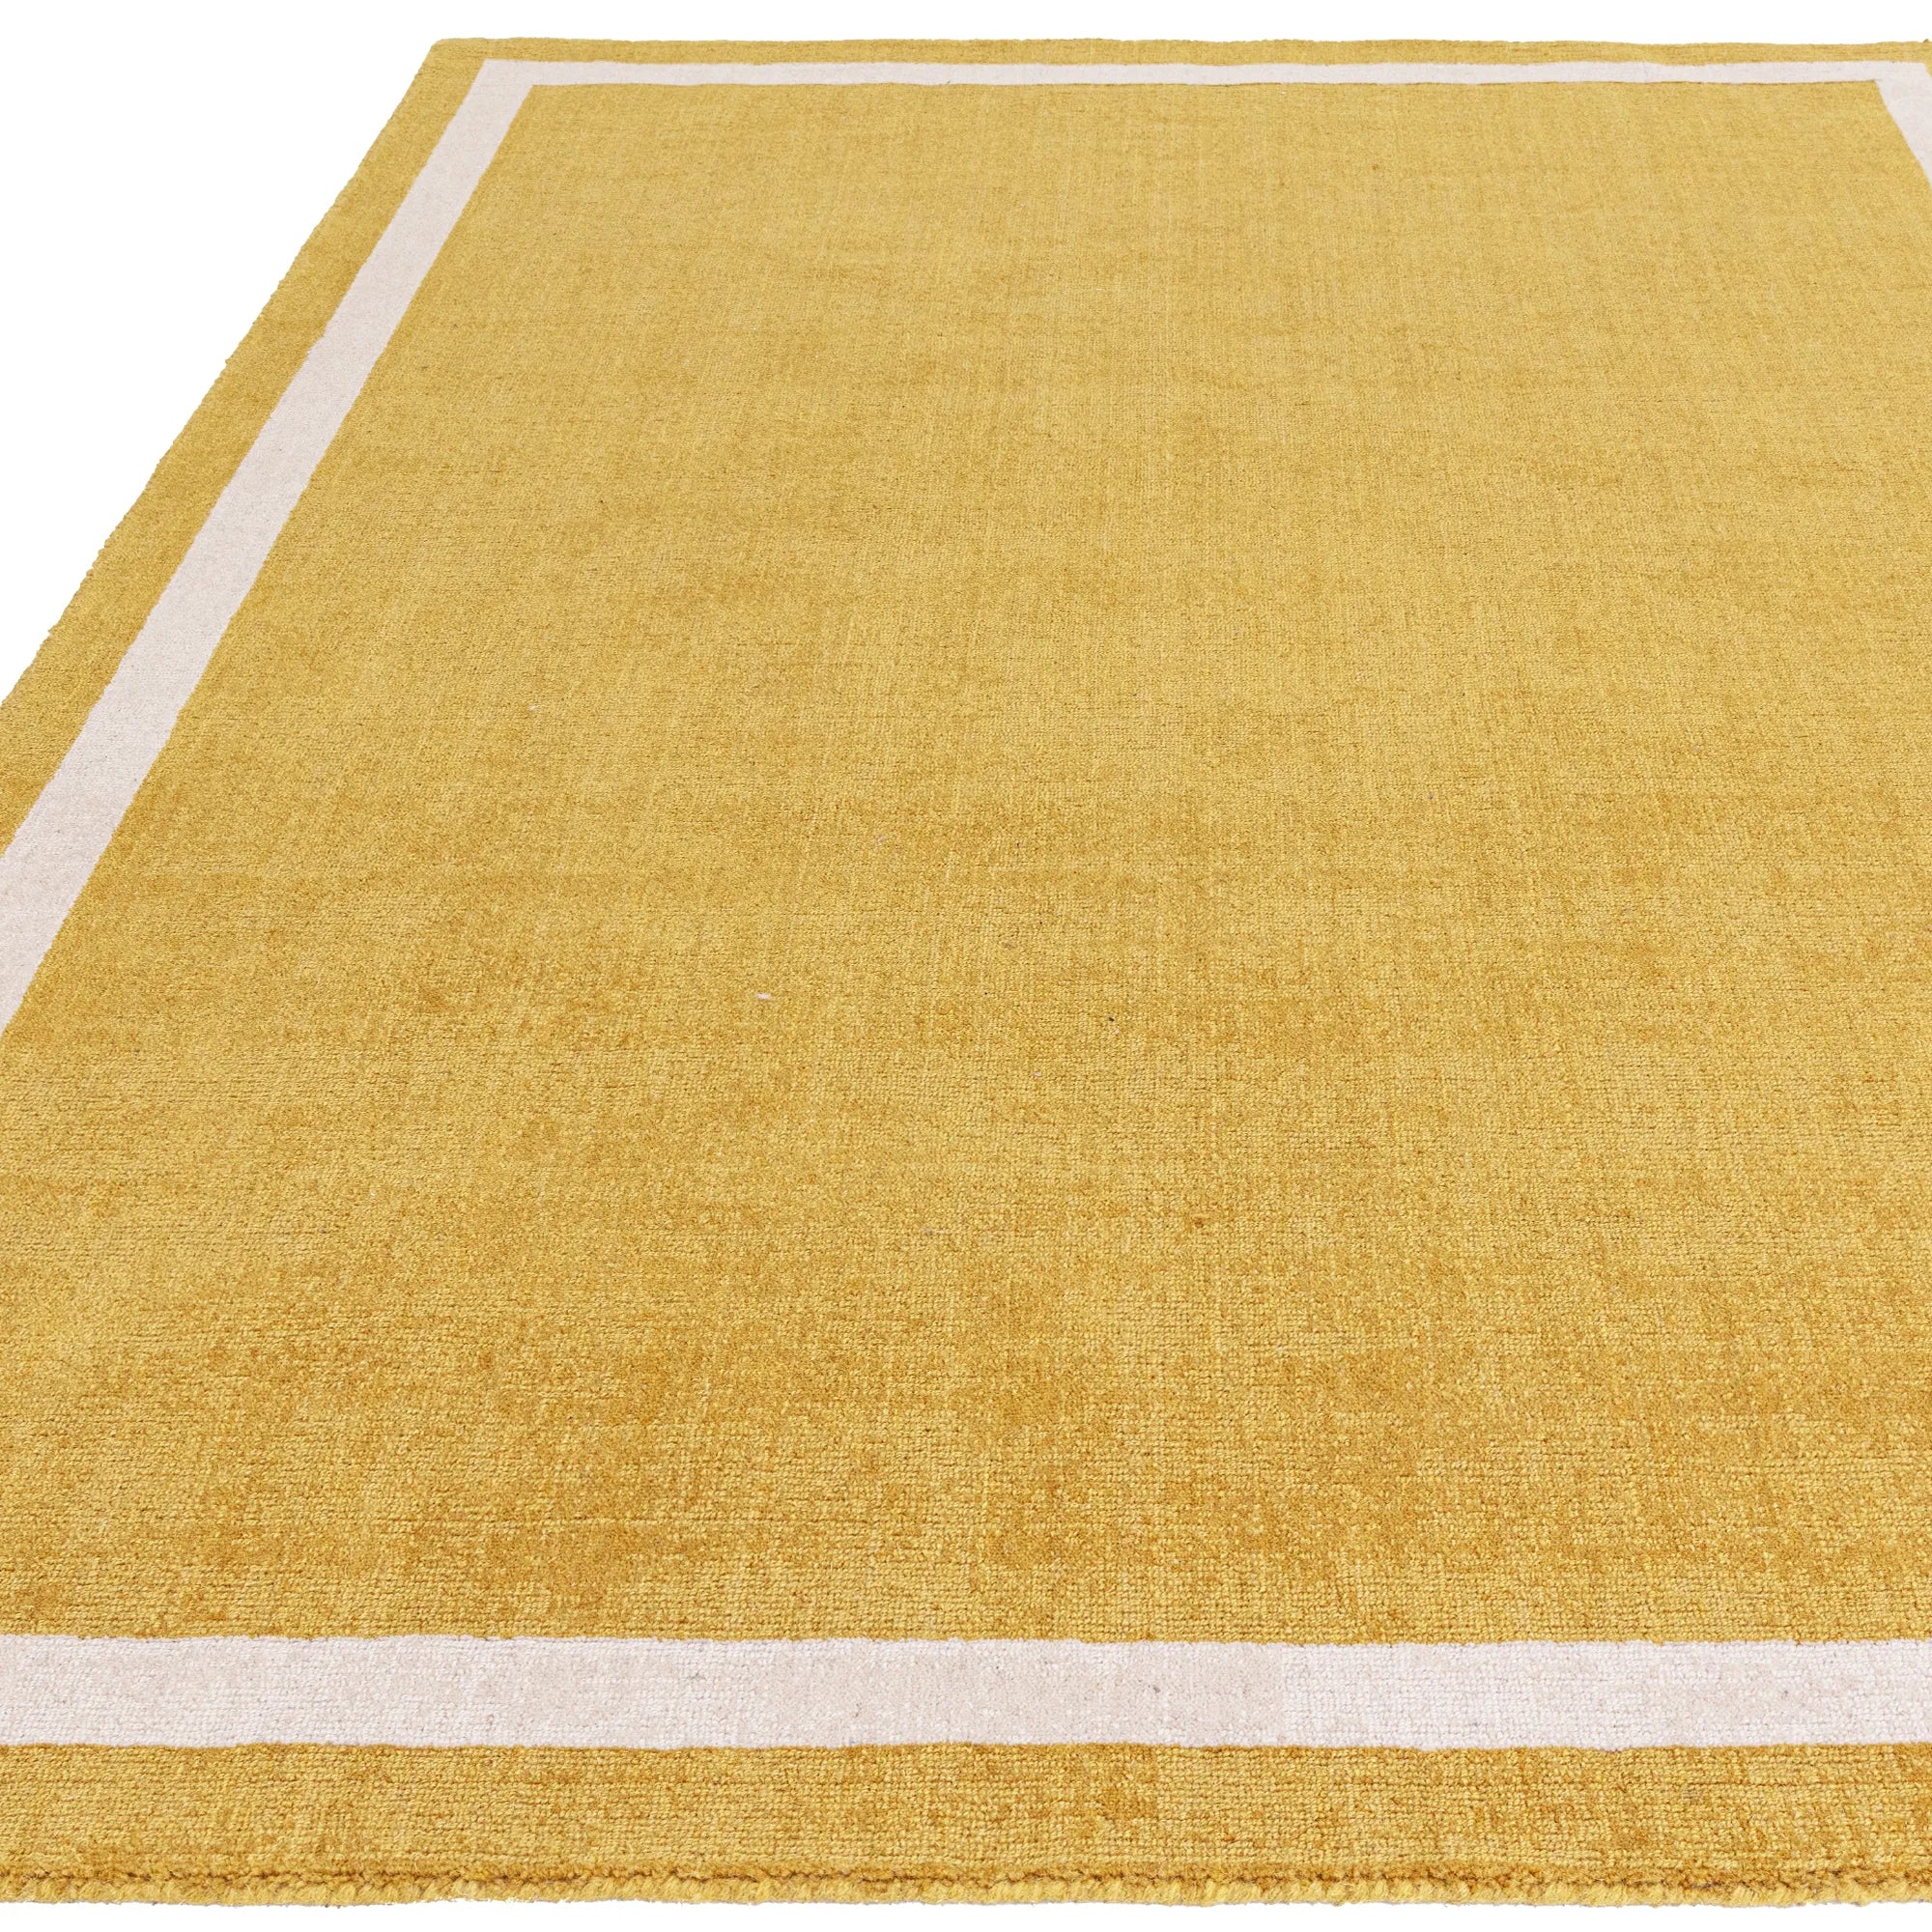 Modern yellow border style rug